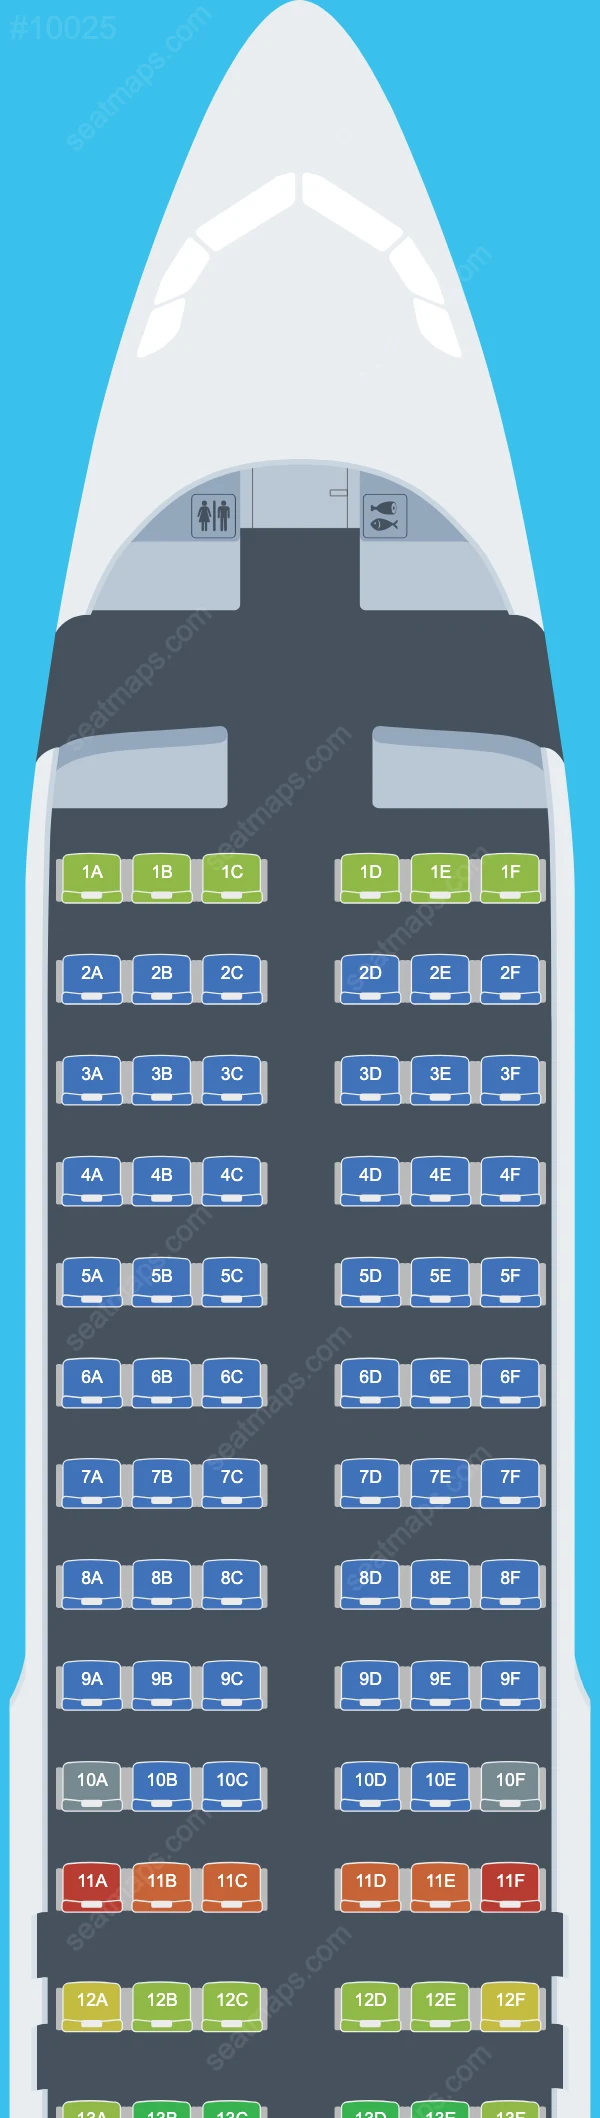 Volaris Airbus A320 Seat Maps A320-200 V.3